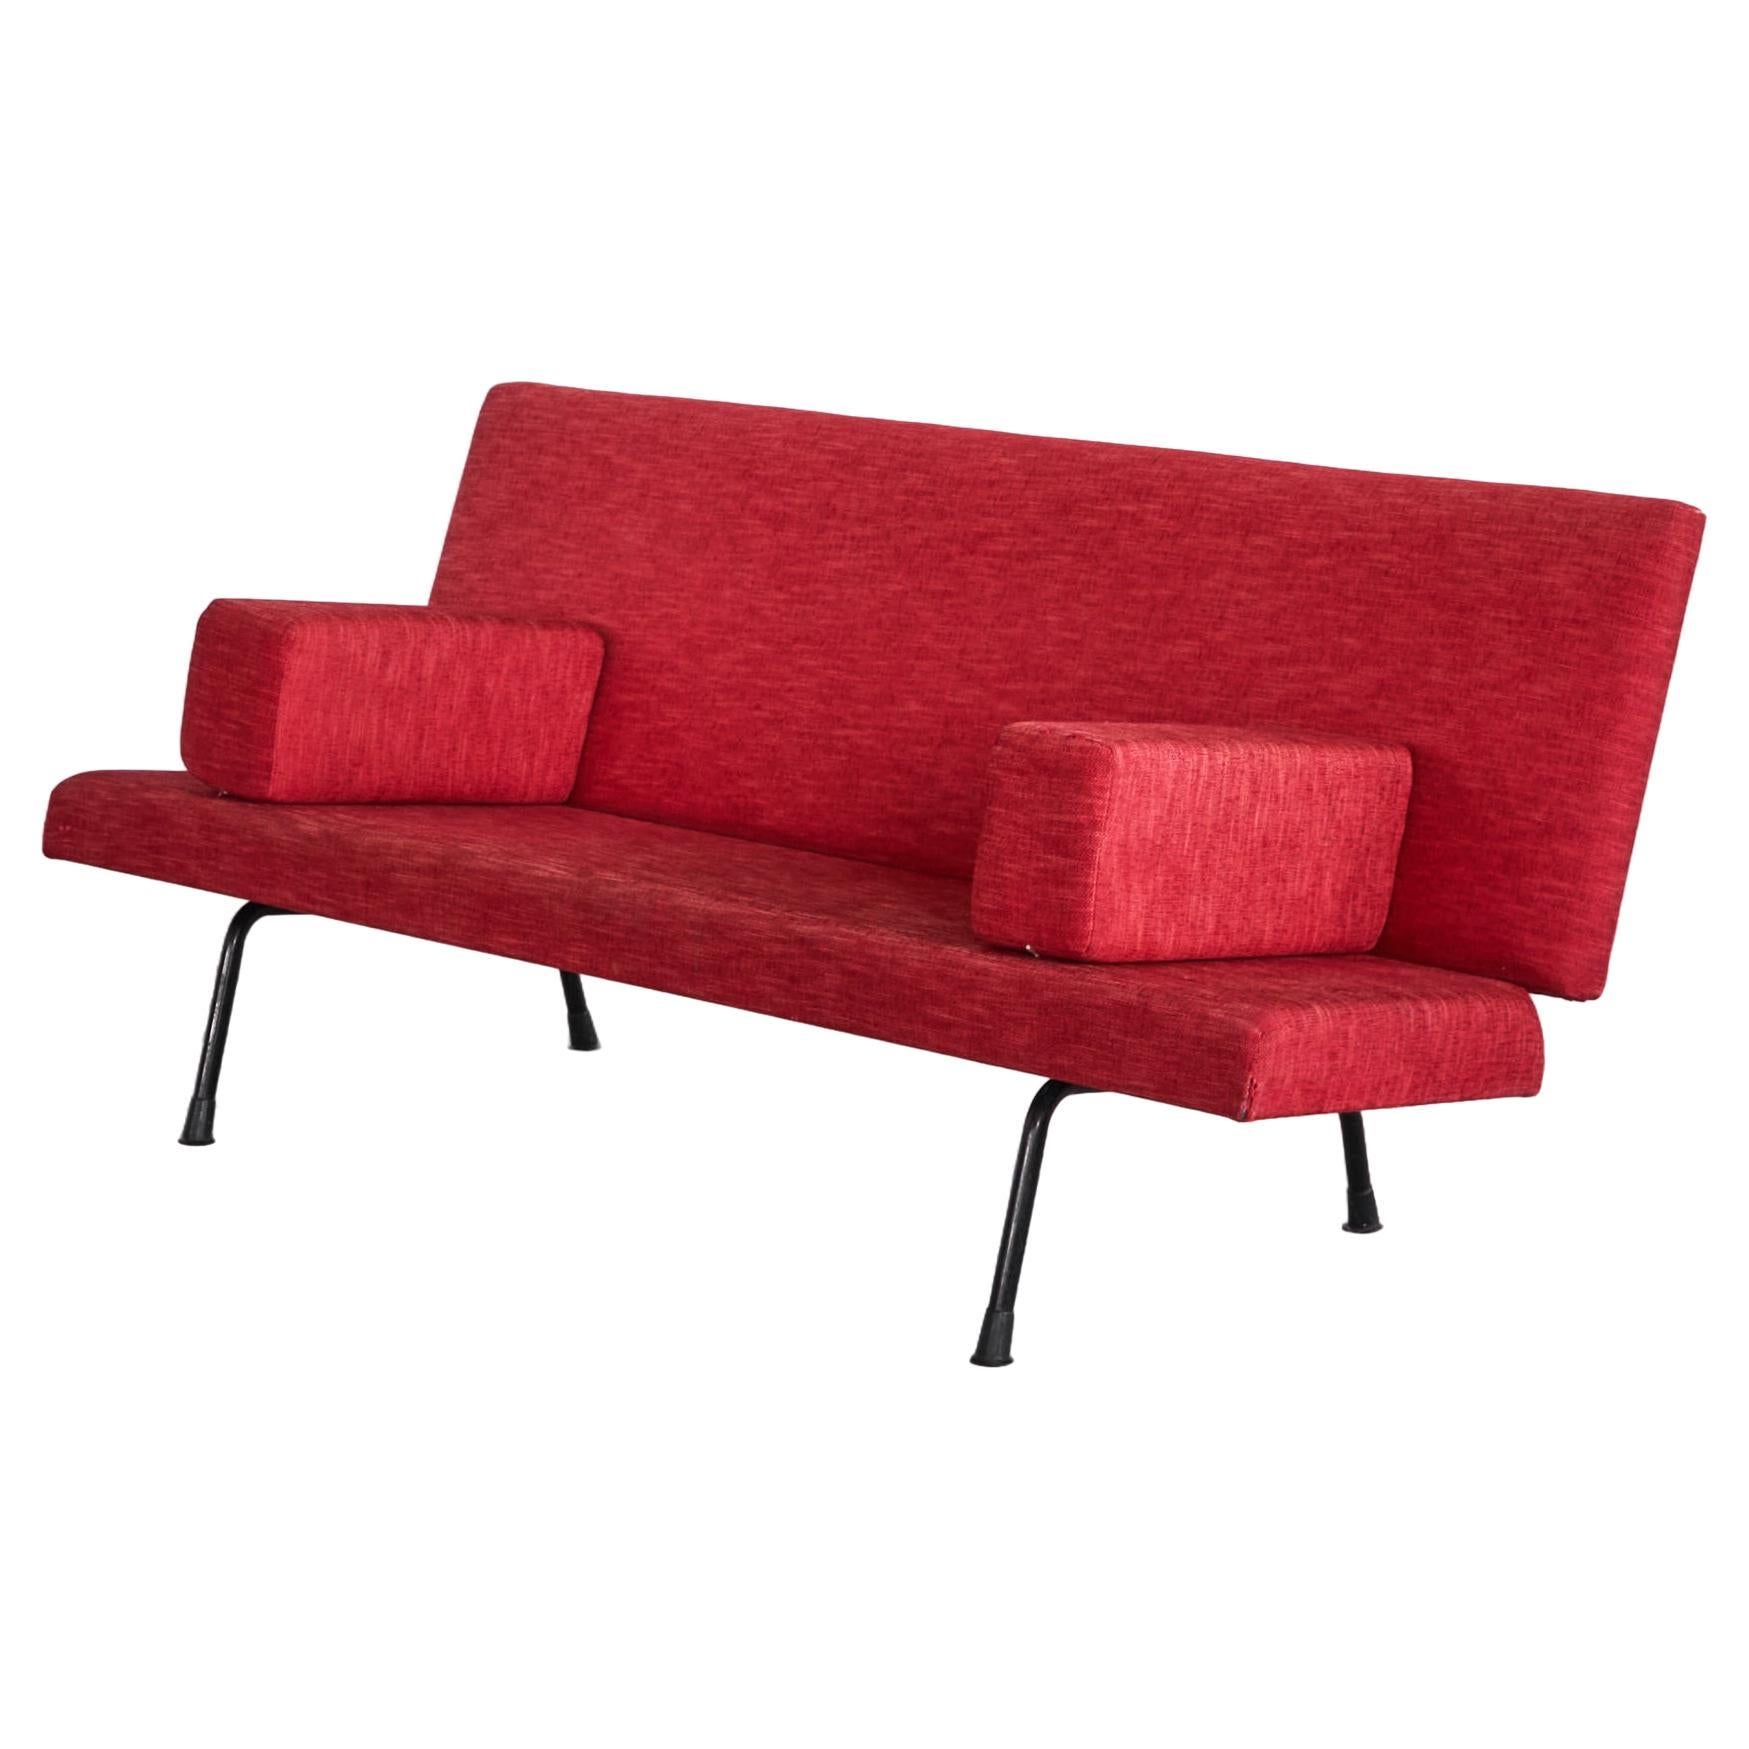 Wim Rietveld '447' Sofa in Red Fabric 1950s